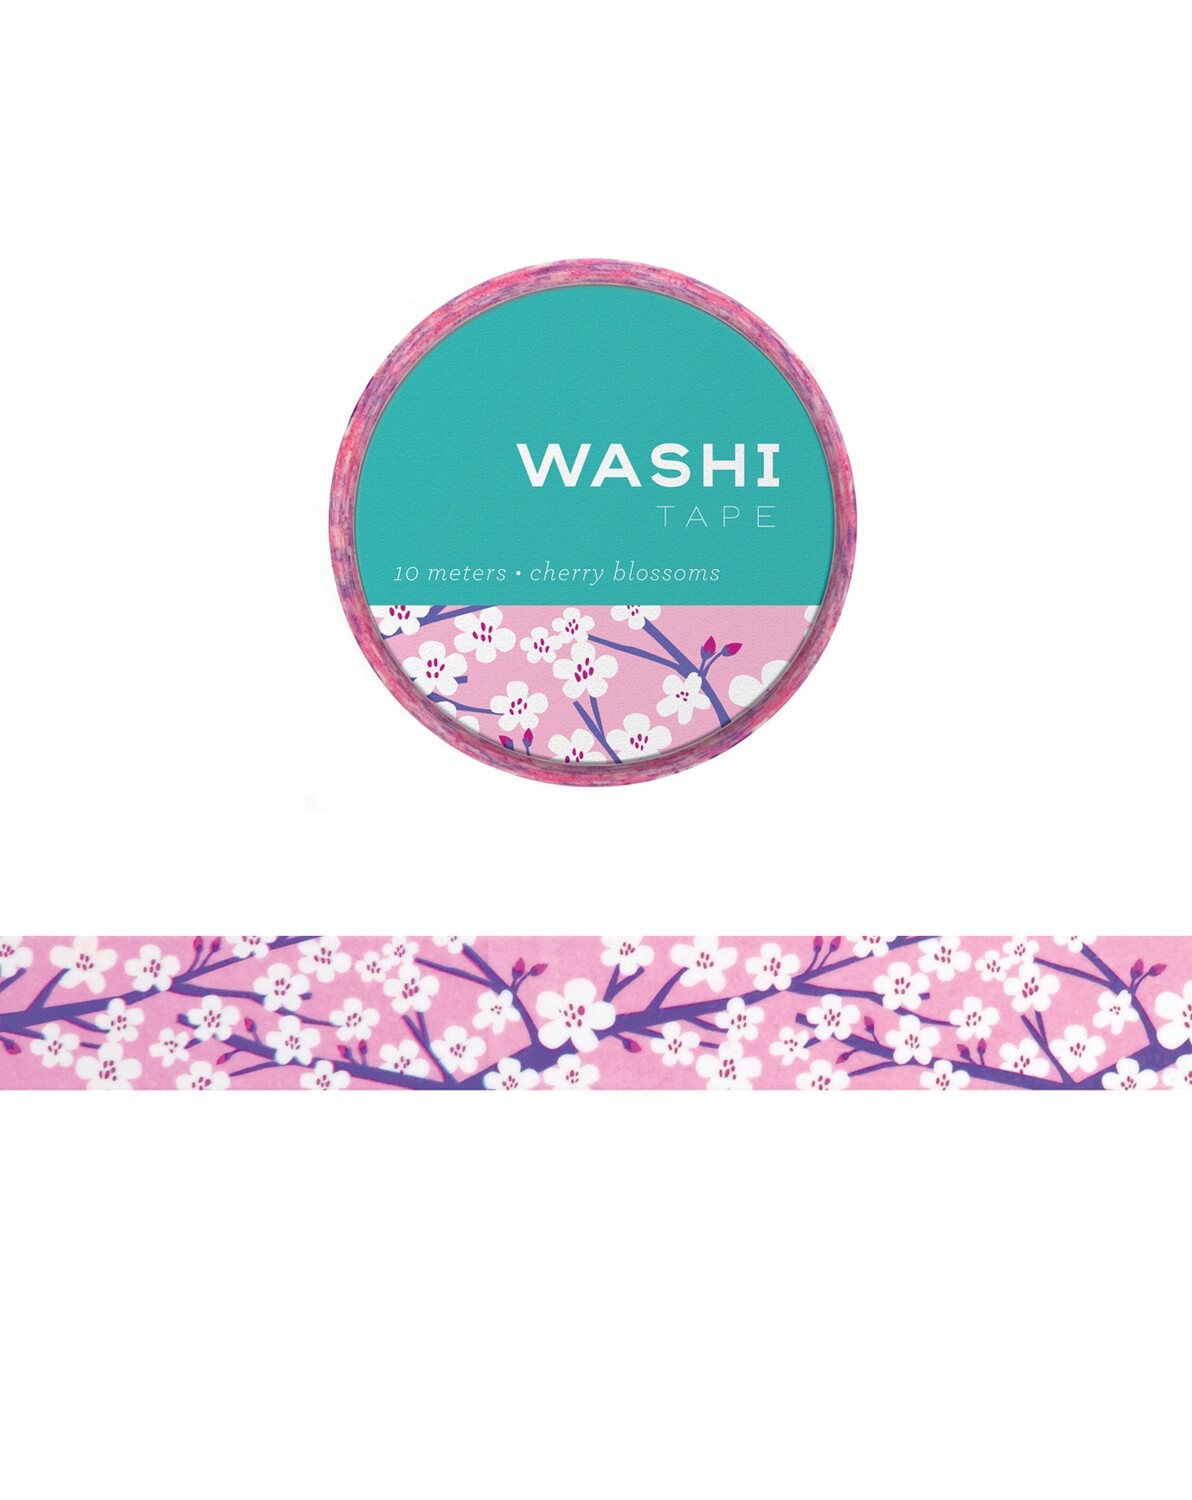 GOAW Washi Tape Cherry Blossoms